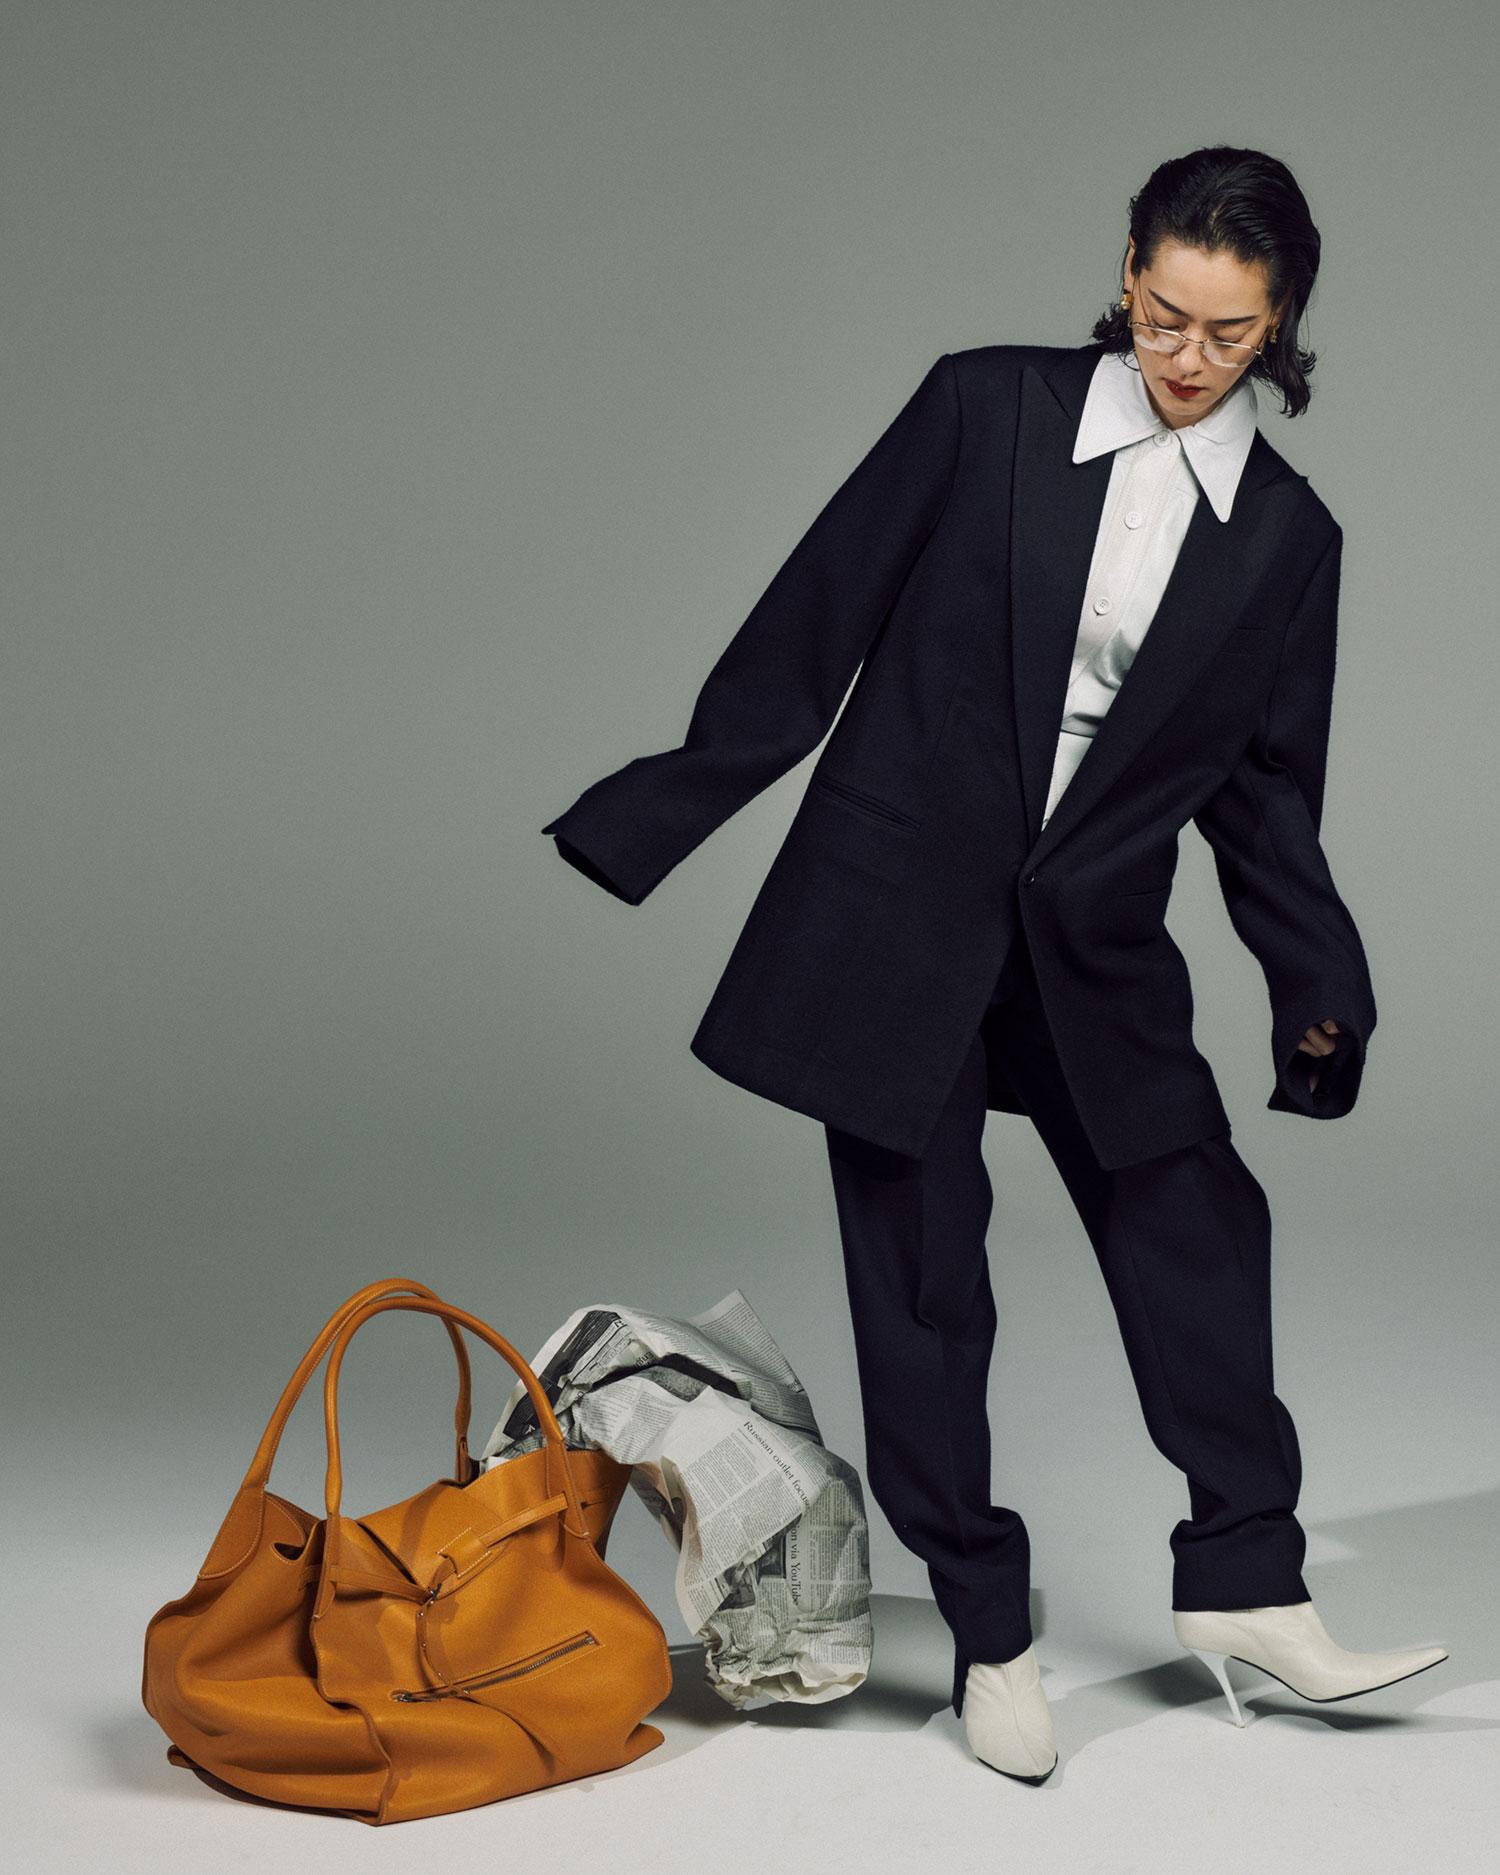 Mikako Ichikawa in Celine Suit by Mitsuo Okamoto for The Fashion Post Japan